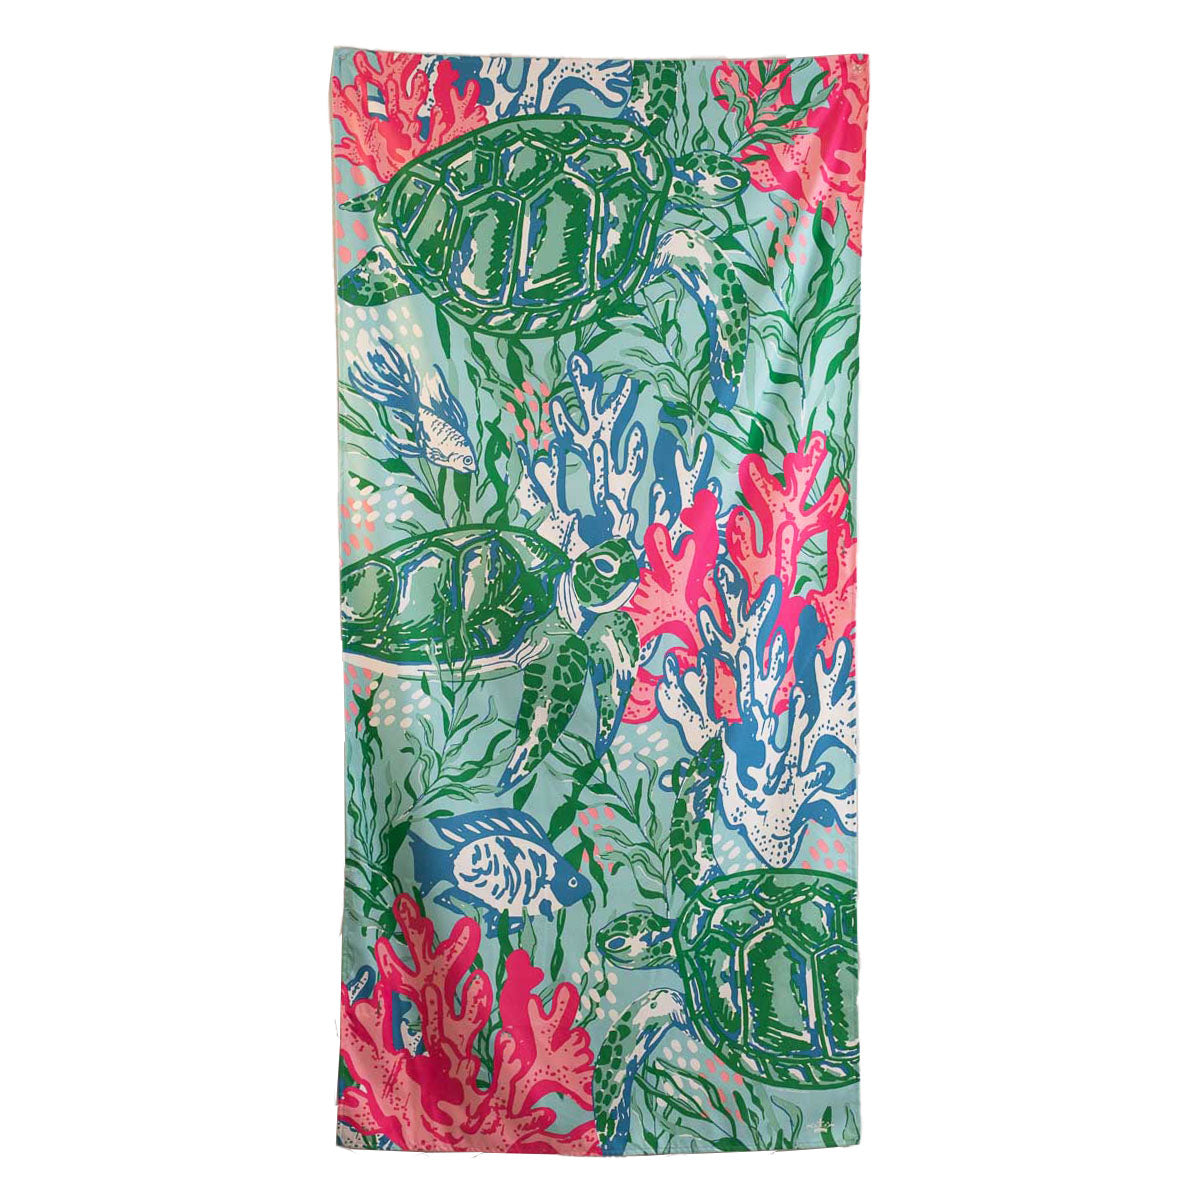 Tobago Cays Beach Towel Aruba Blue/Lime/Hot Pink 34x70